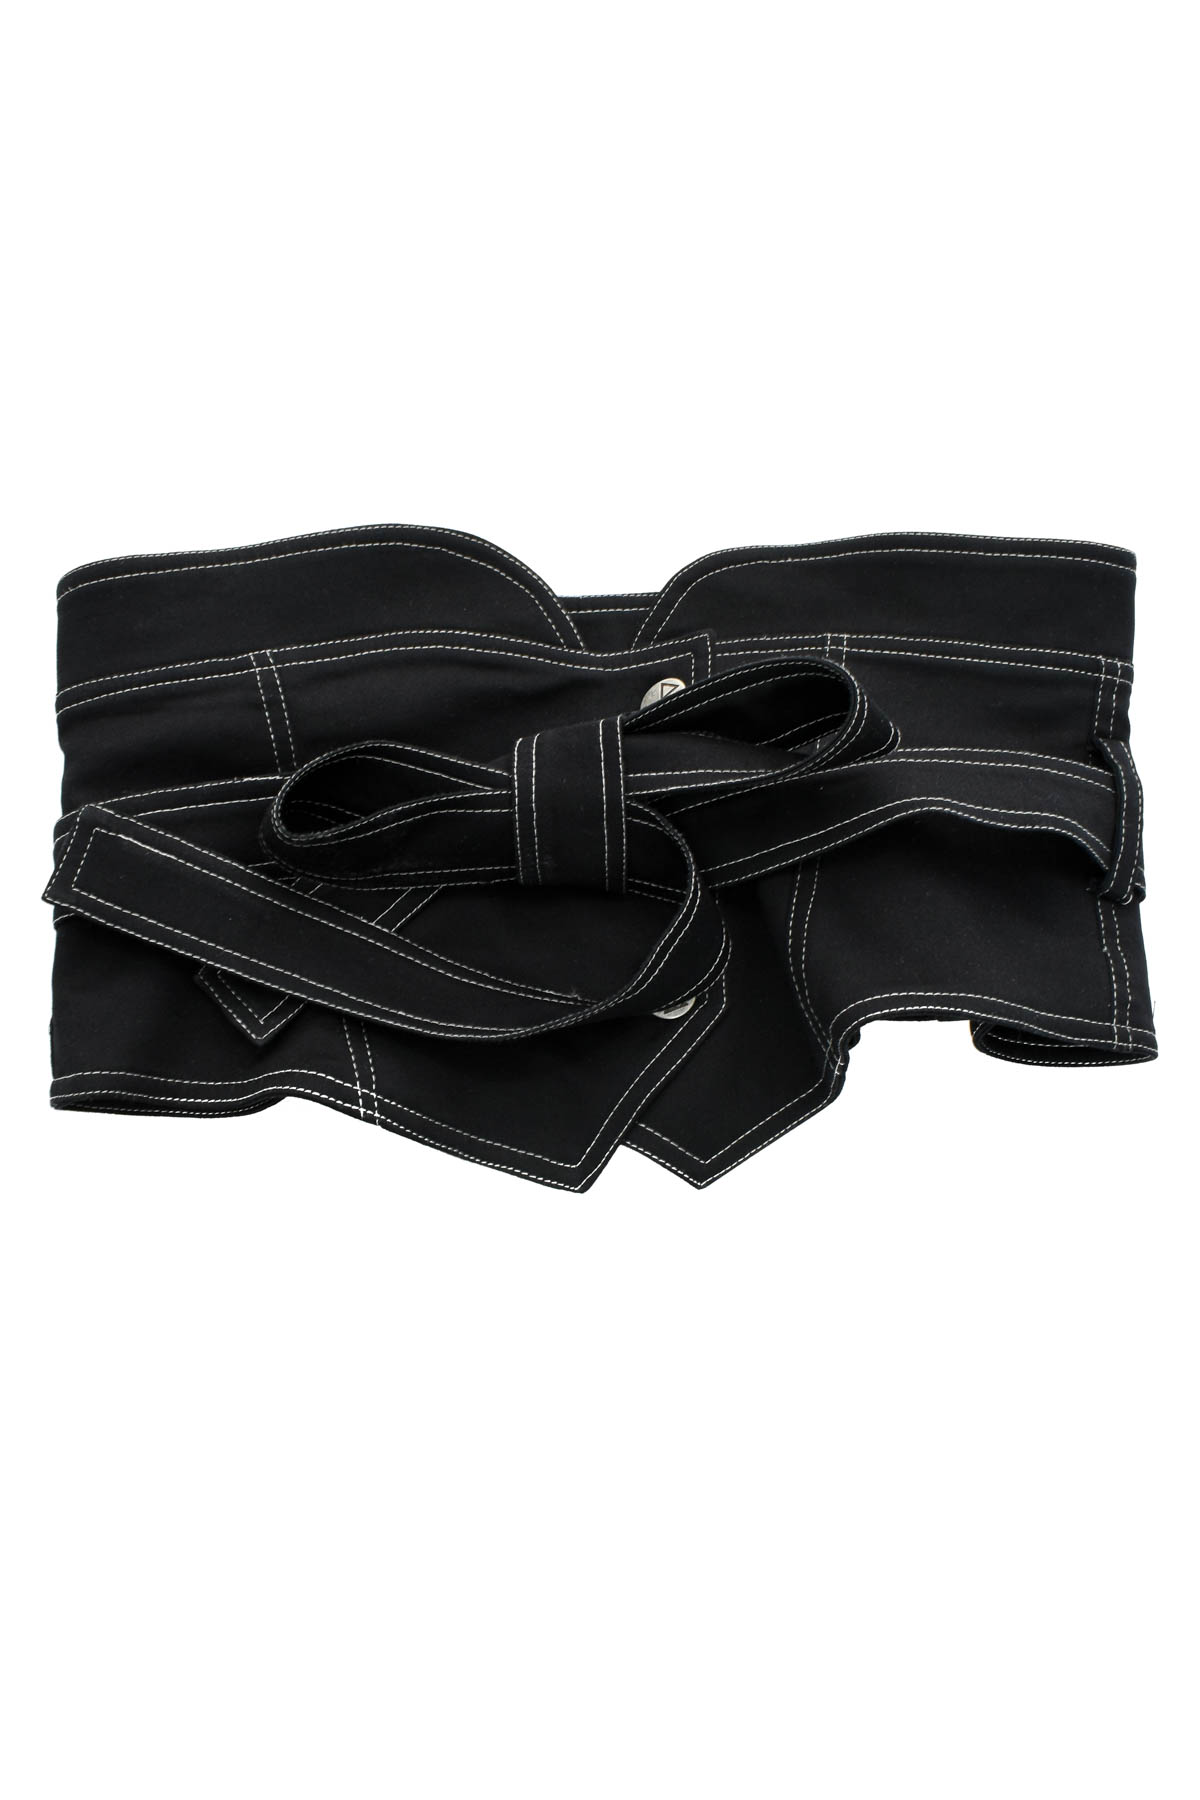 Ladies's belt - METAMORPHOZA - 0